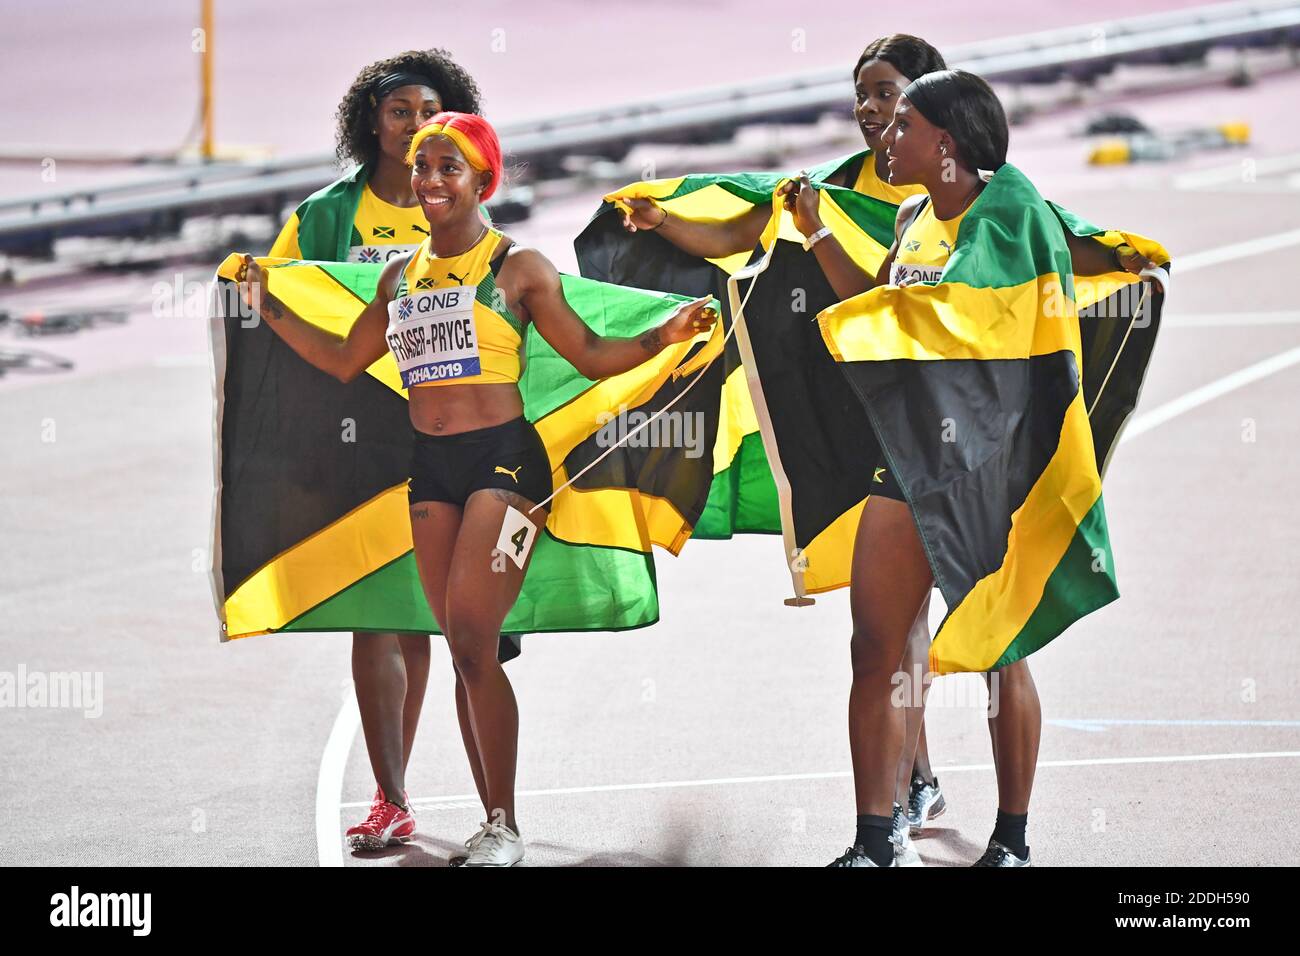 Natalliah Whyte, Shelly-Ann Fraser-Pryce, Jonielle Smith, Shericka Jackson (Jamaica). 4x100 relay Gold Medal. World Athletics Championships, Doha 2019 Stock Photo